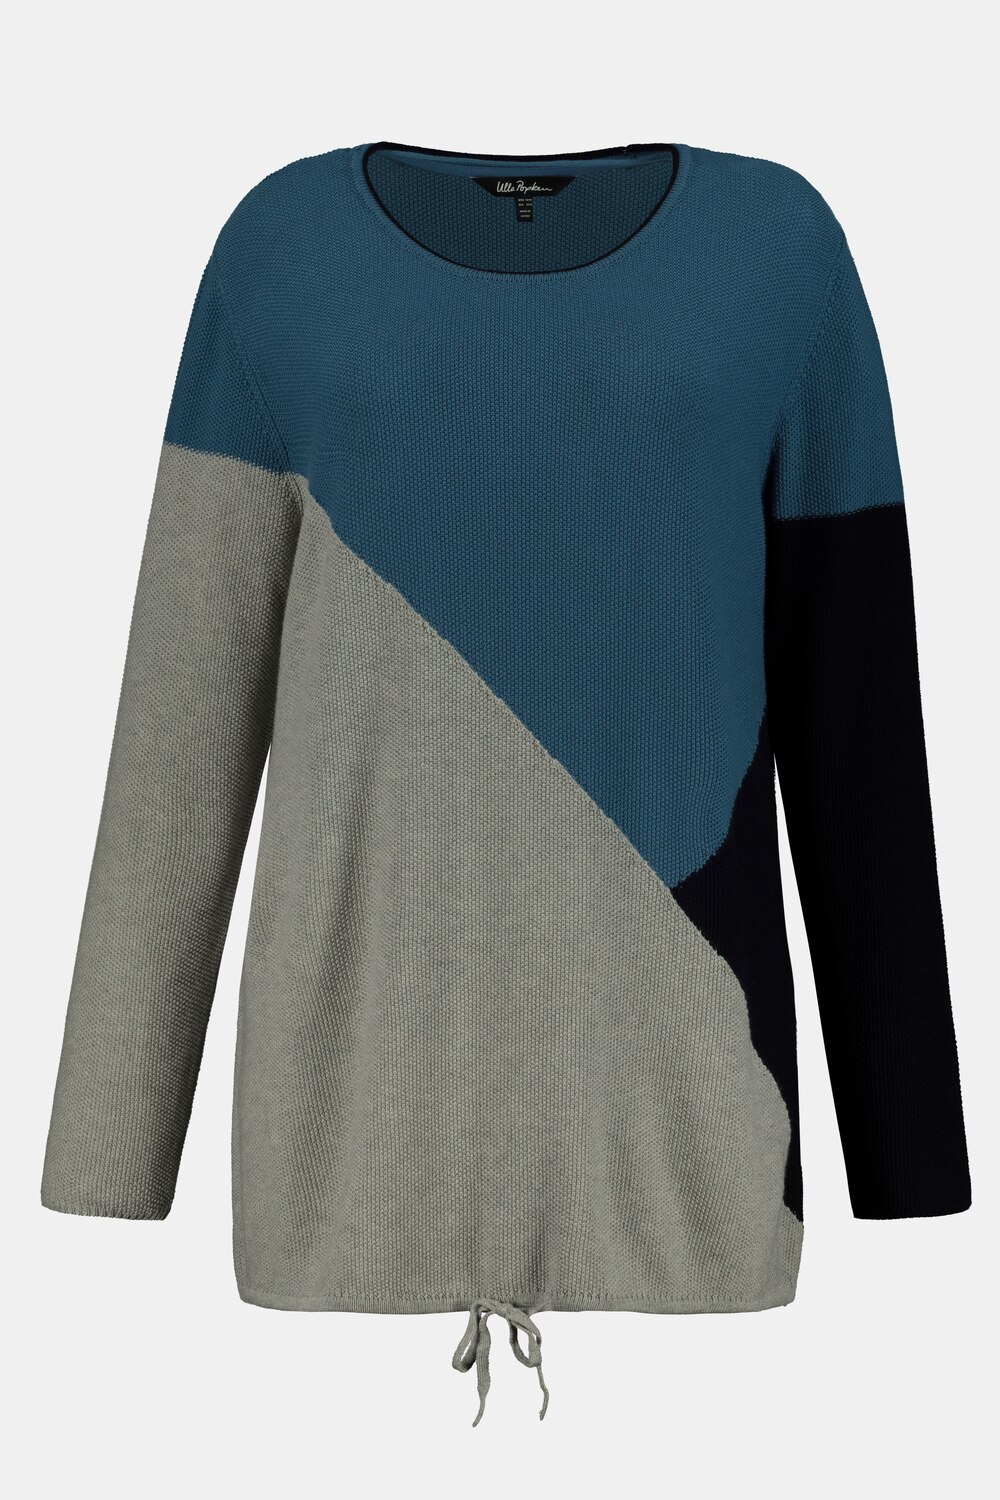 Plus Size Asymmetric Colorblock Textured Sweater, Woman, blue, size: 20/22, synthetic fibers/cotton, Ulla Popken